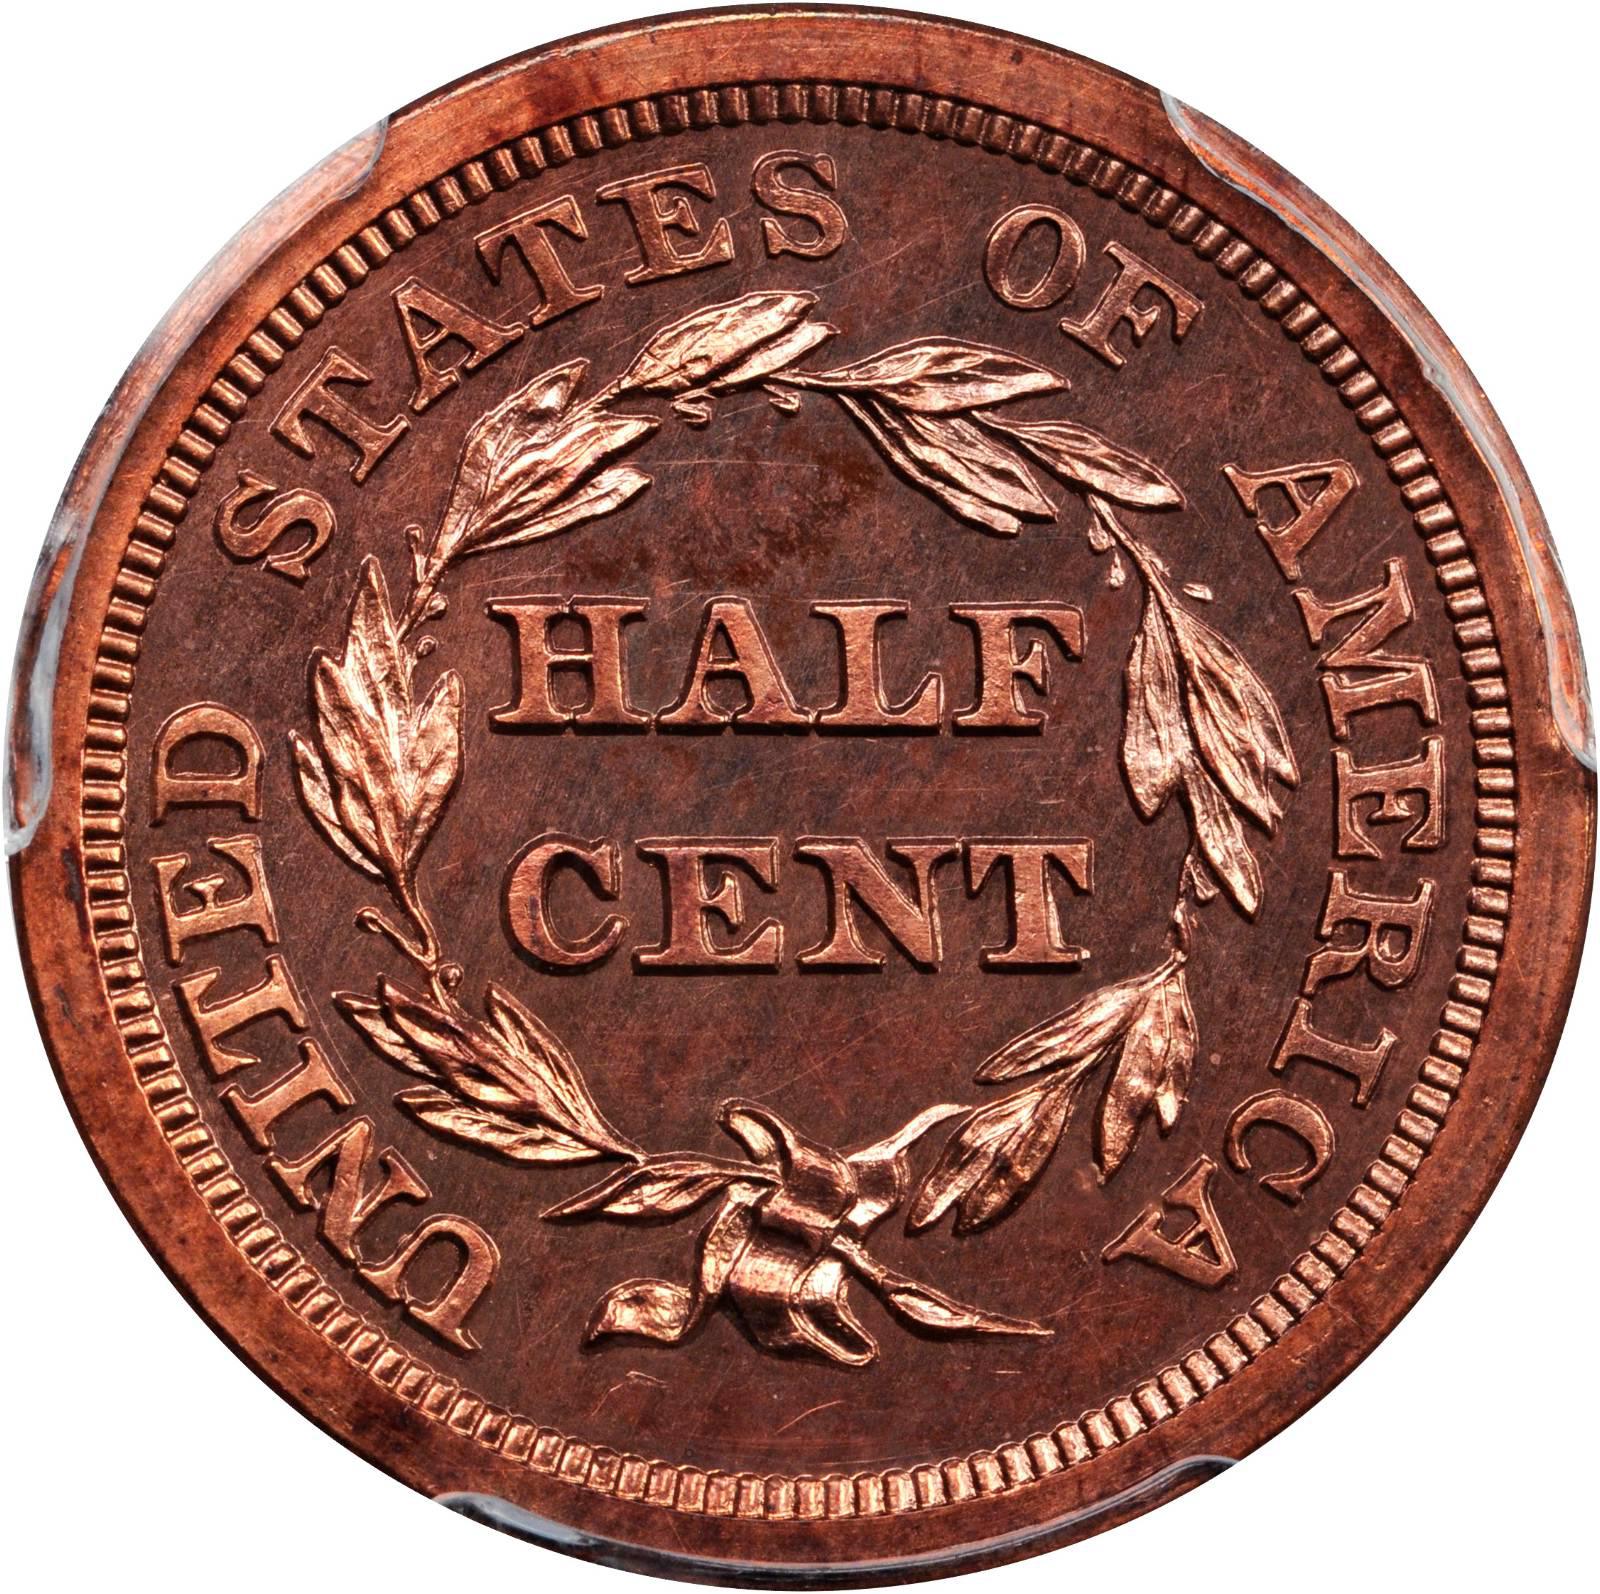 Value of 1856 Braided Hair Half Cent